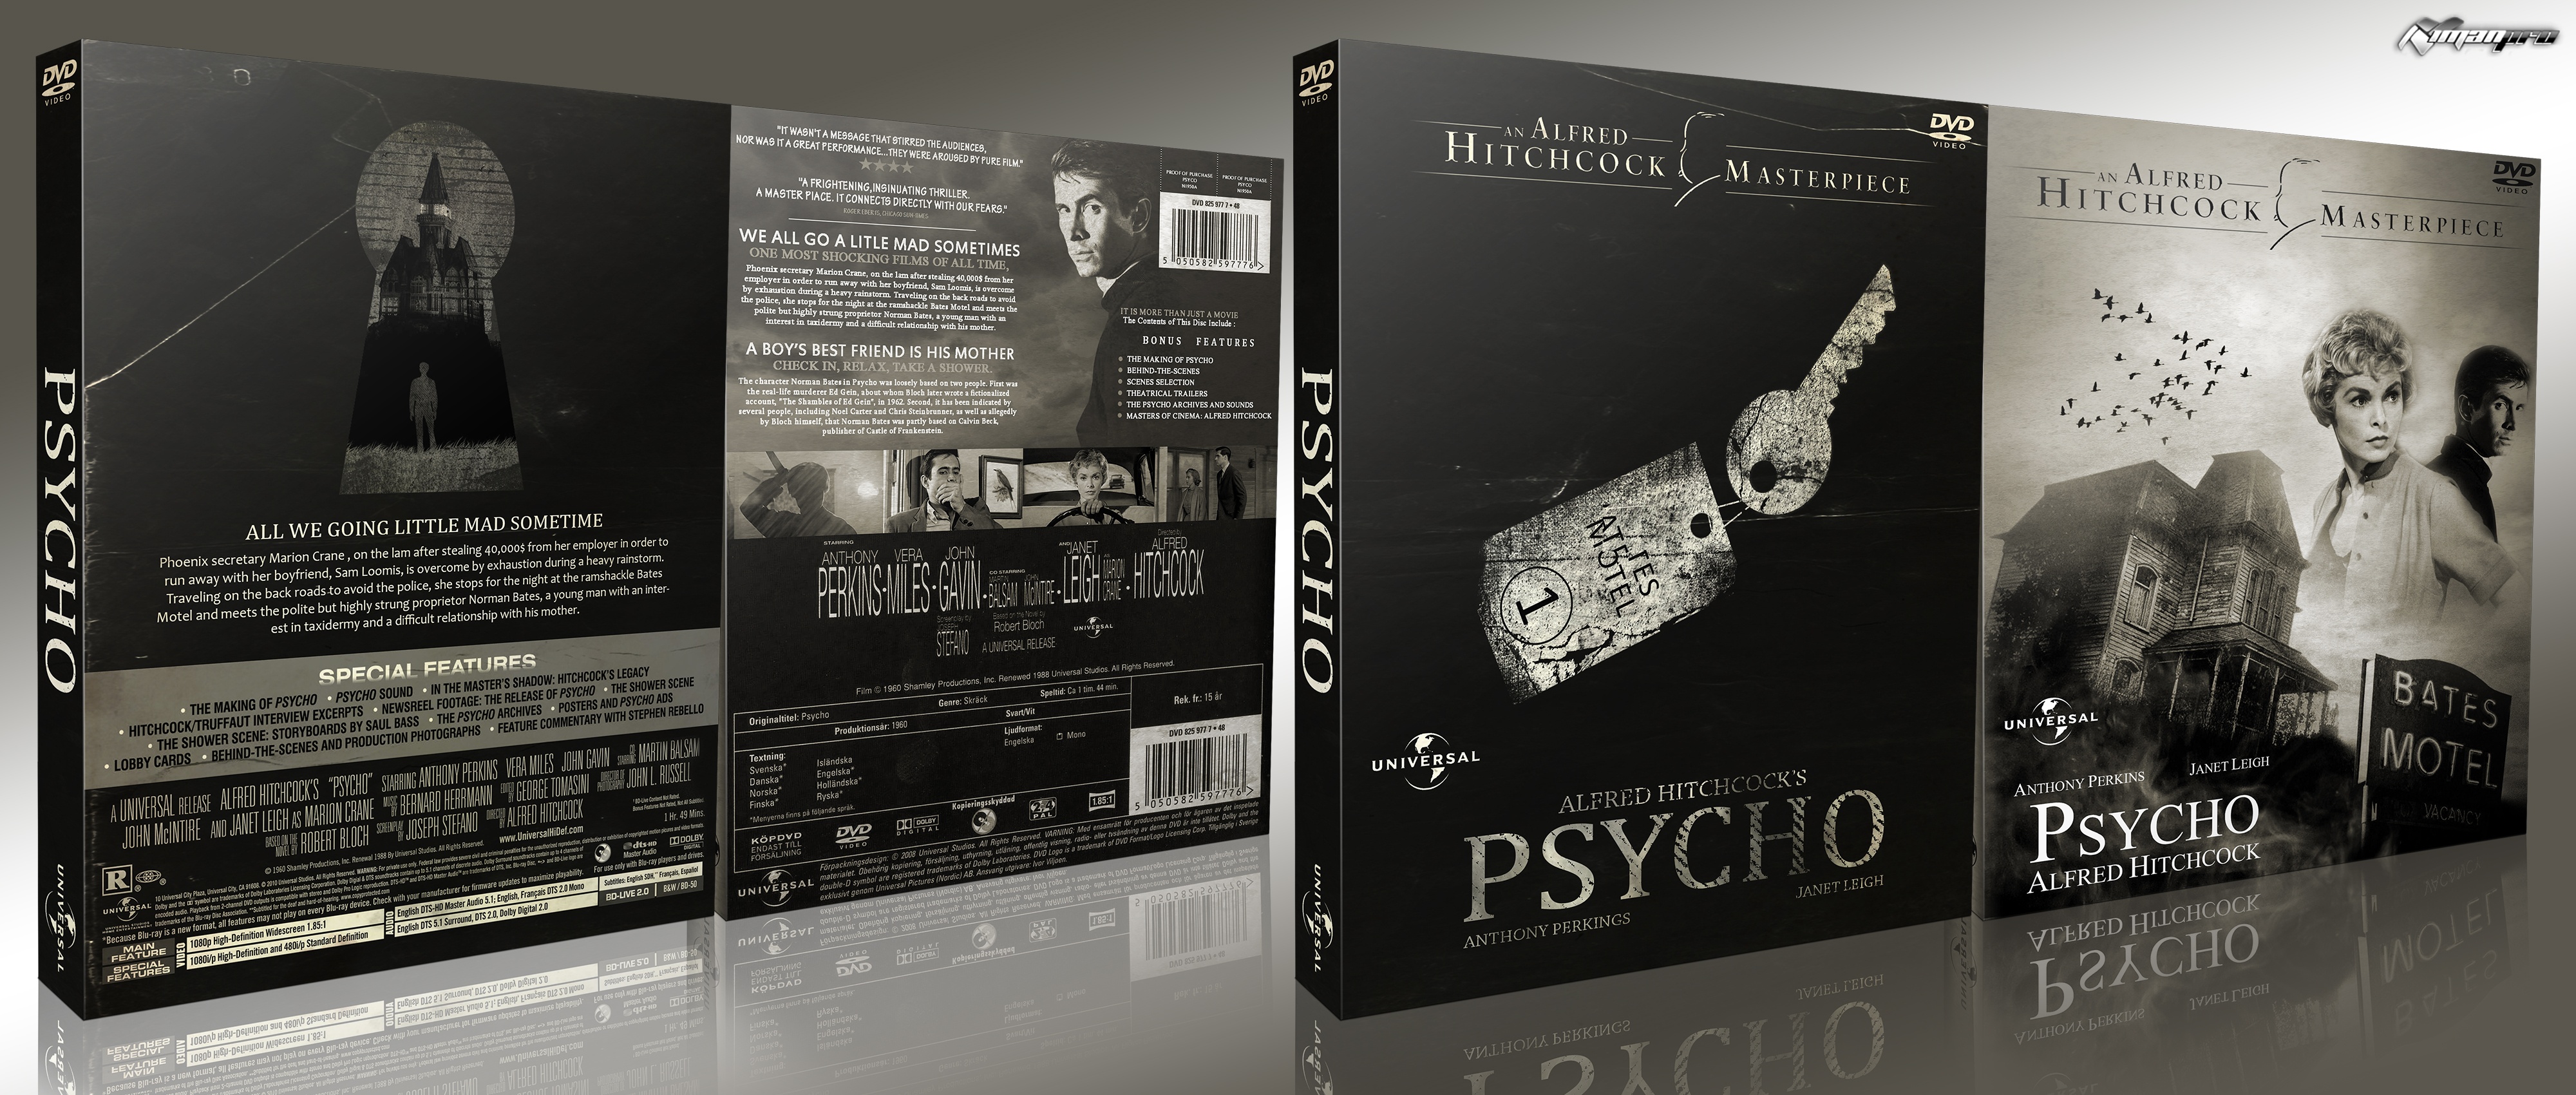 Psycho box cover